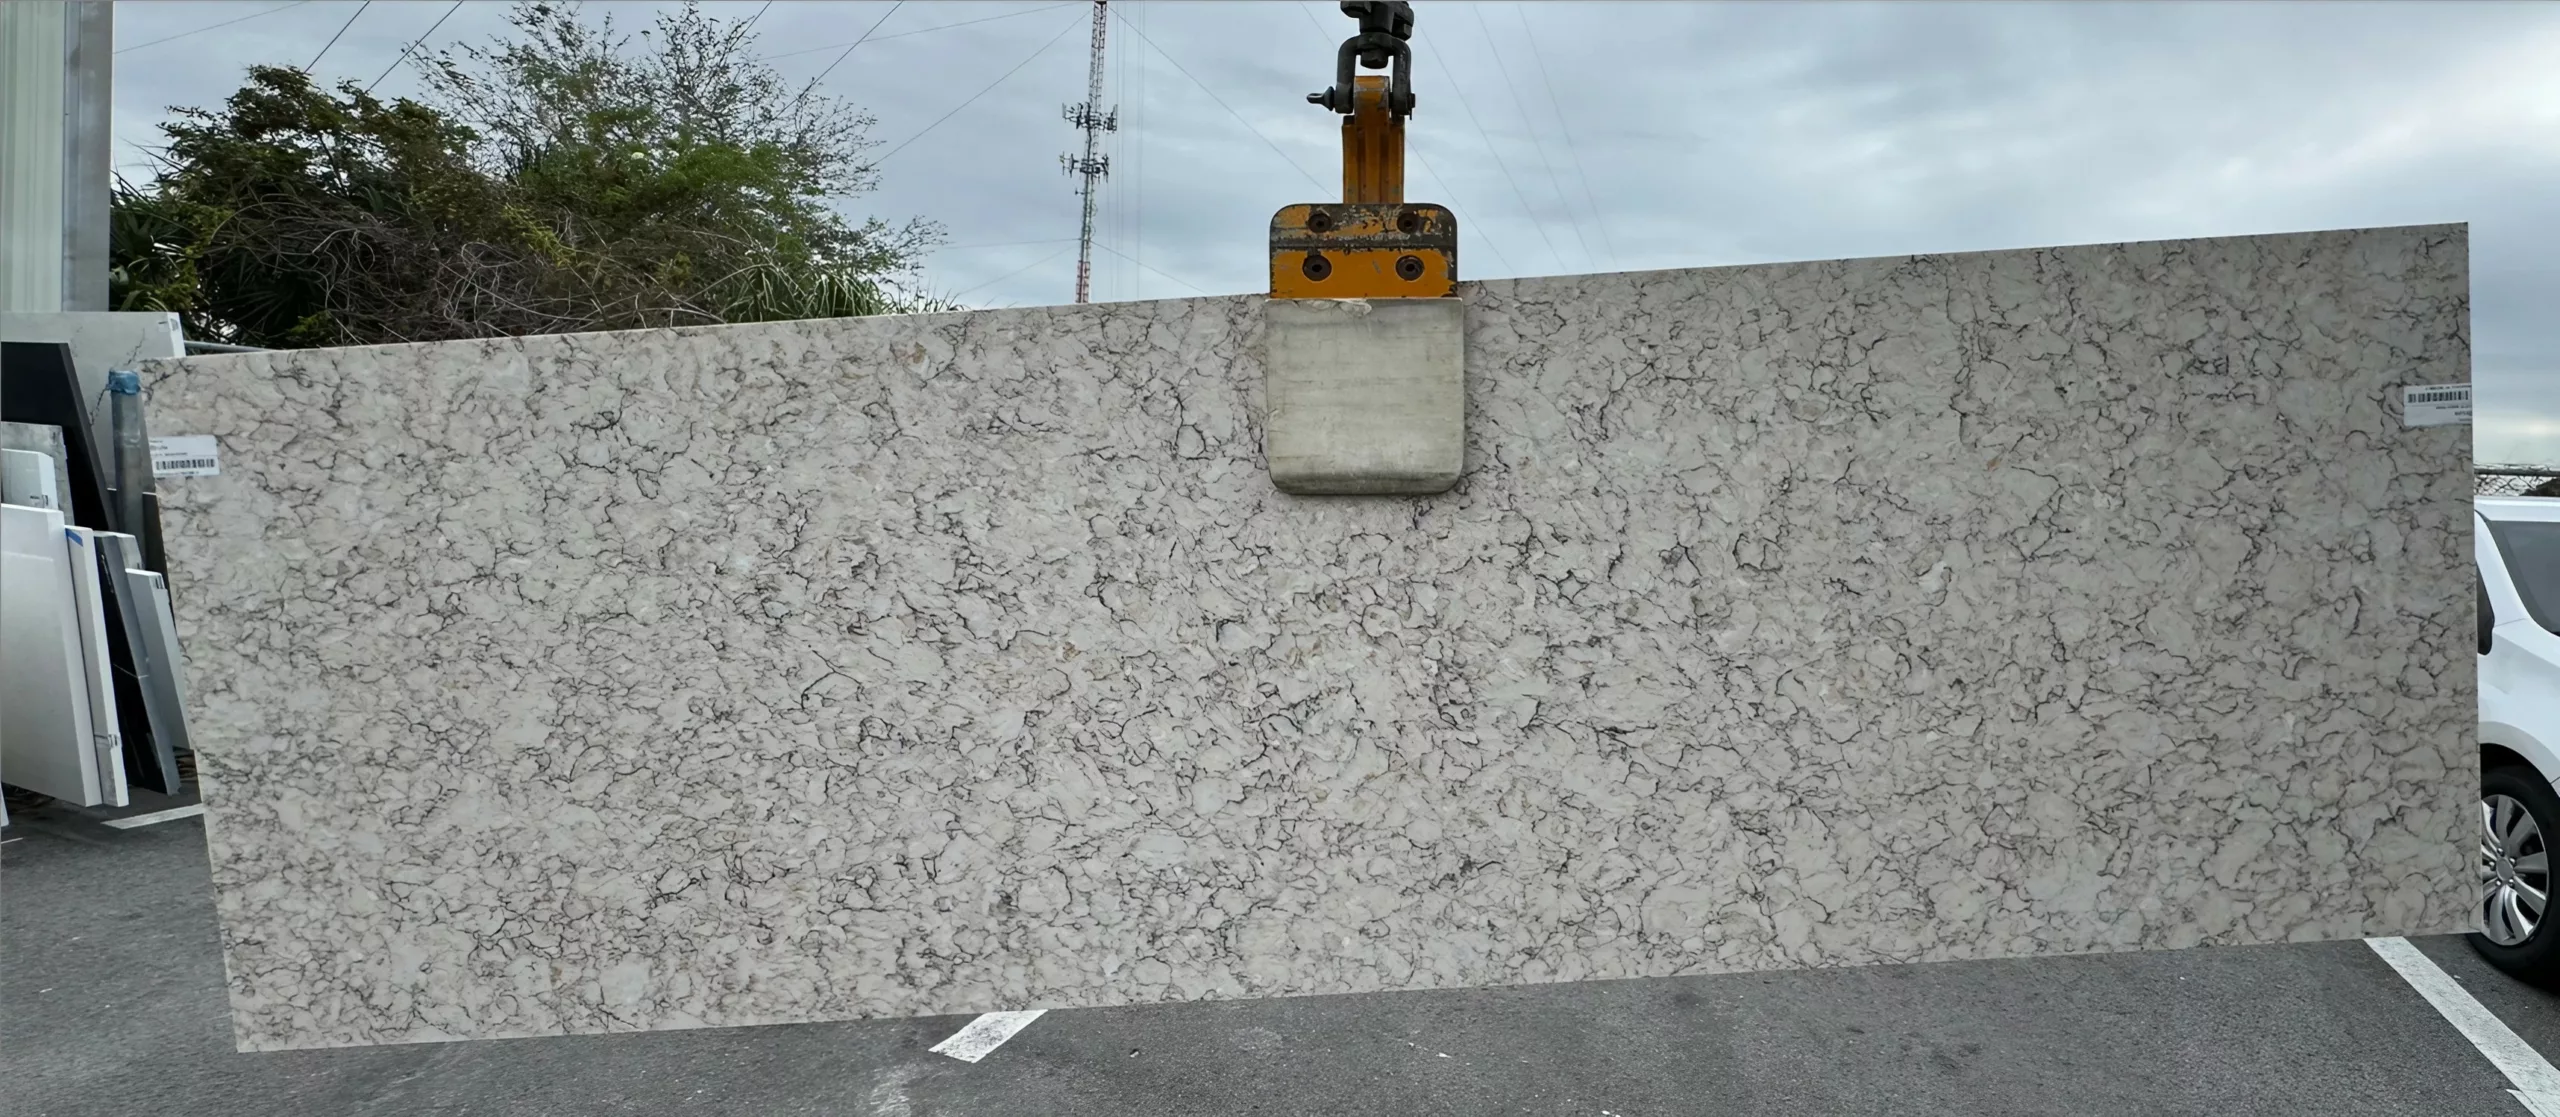 Tampa Cheap Granite and Cambria Quartz Remnants- Purchase Leftover Countertop Pieces